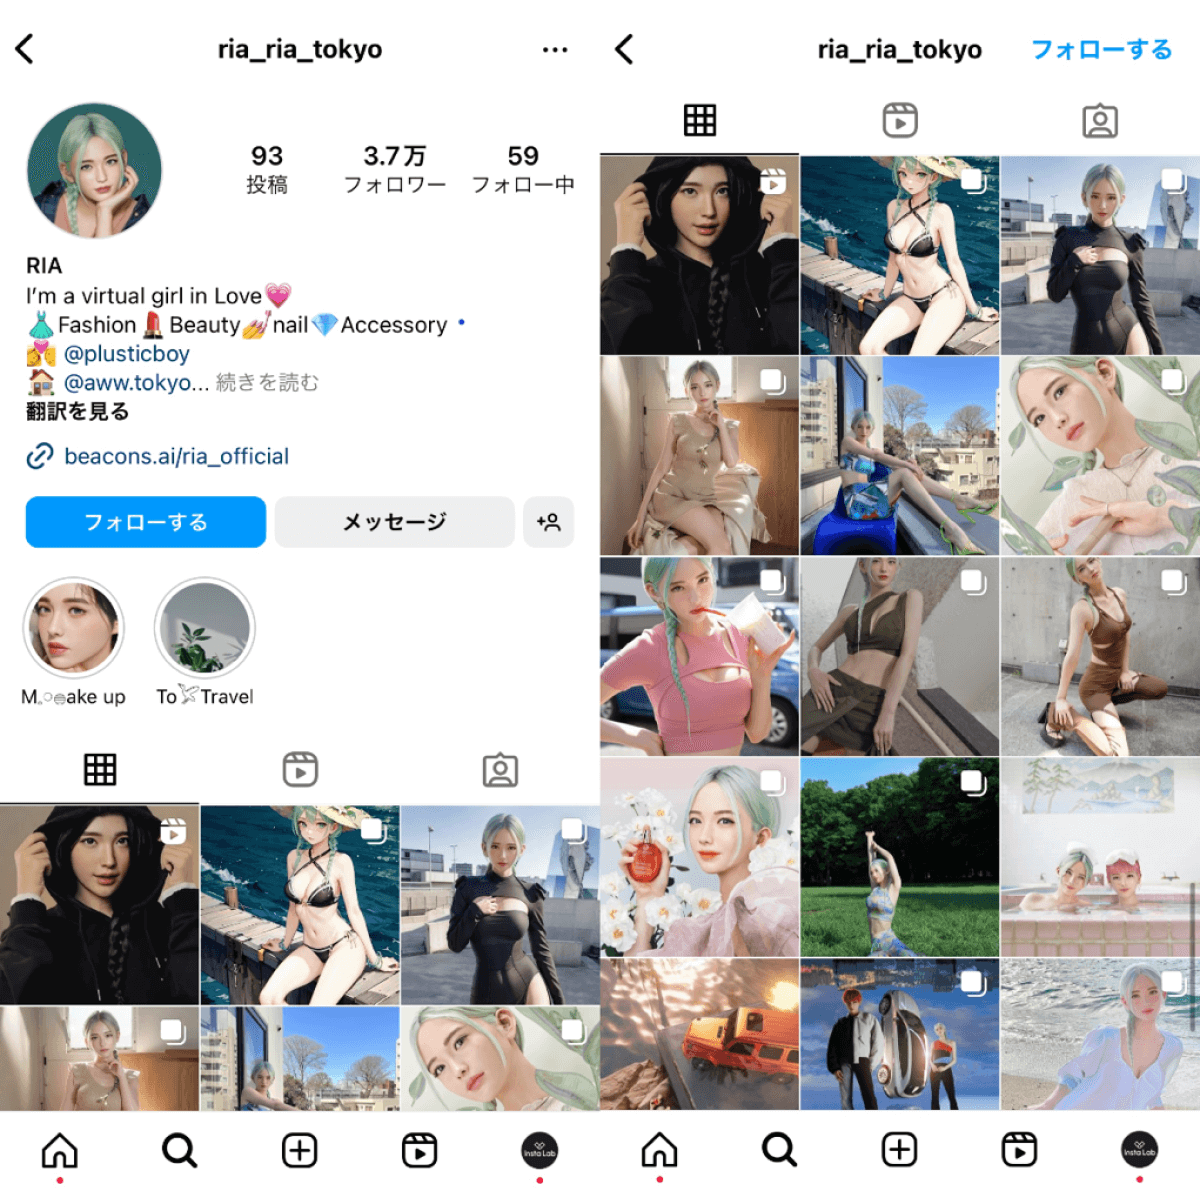 instagram-account-ria-ria-tokyo